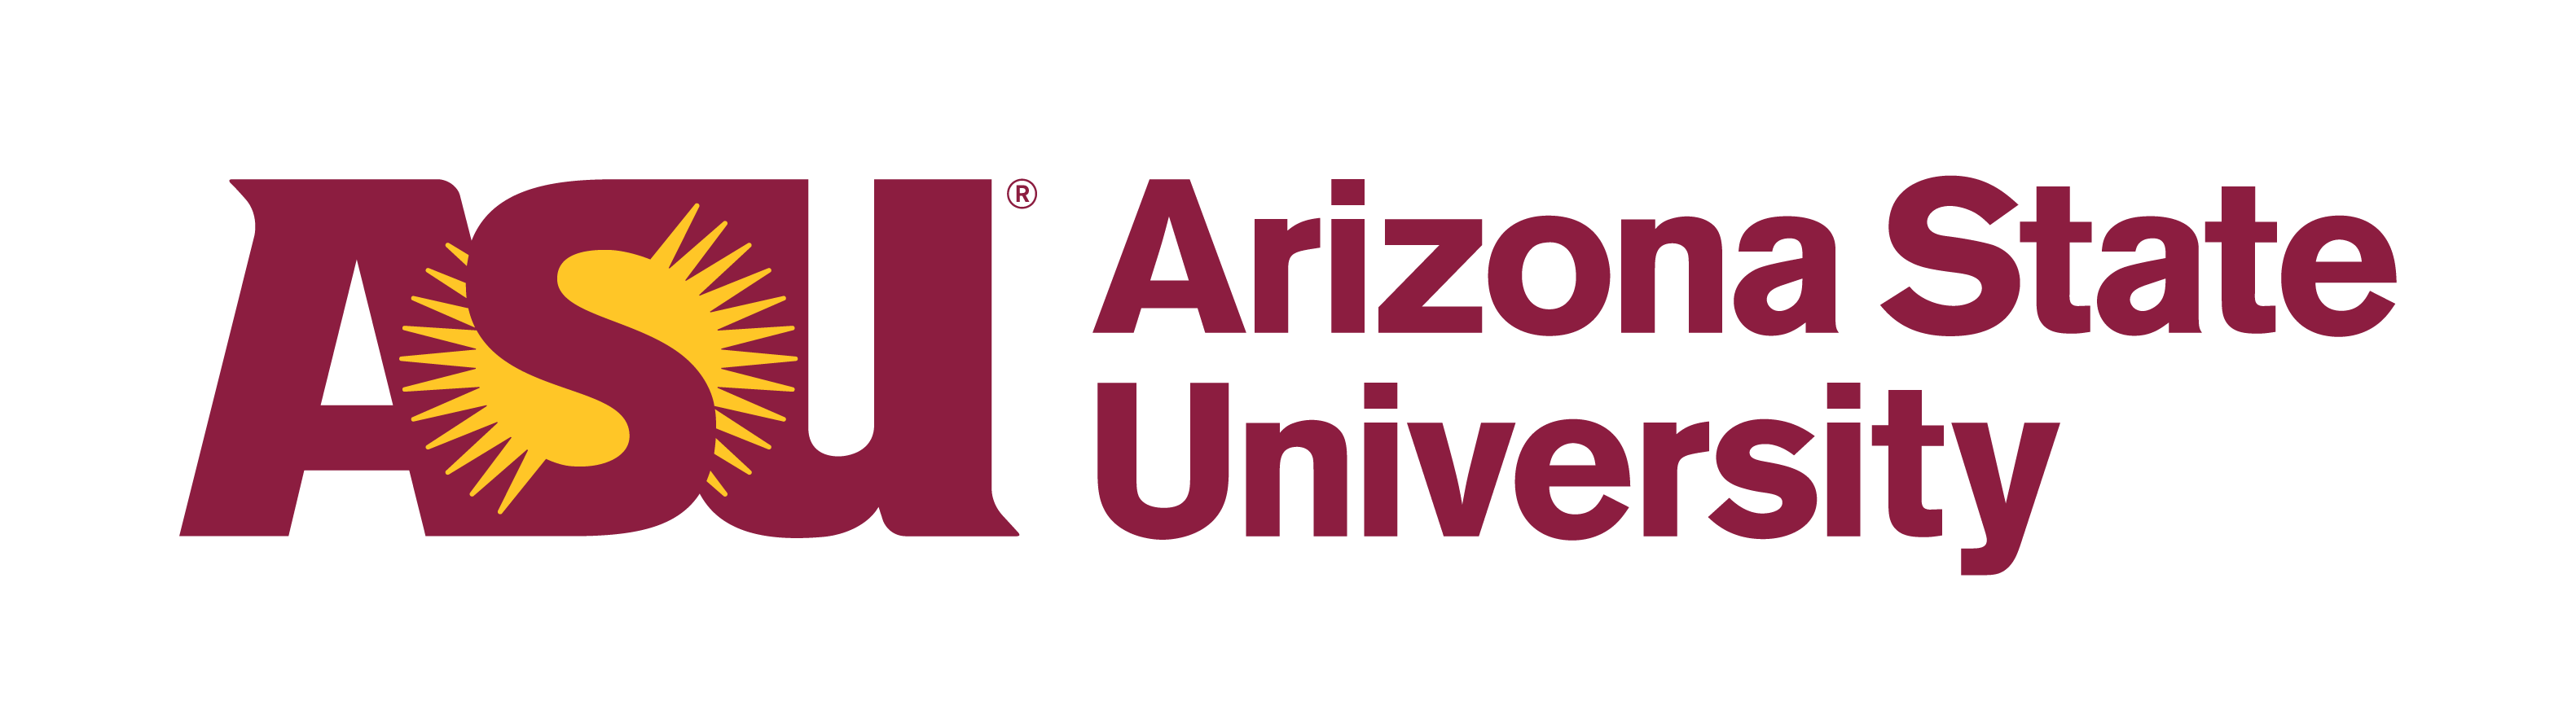 azu_td_3132241_sip1_m.pdf(17187KB) - Arizona Campus Repository